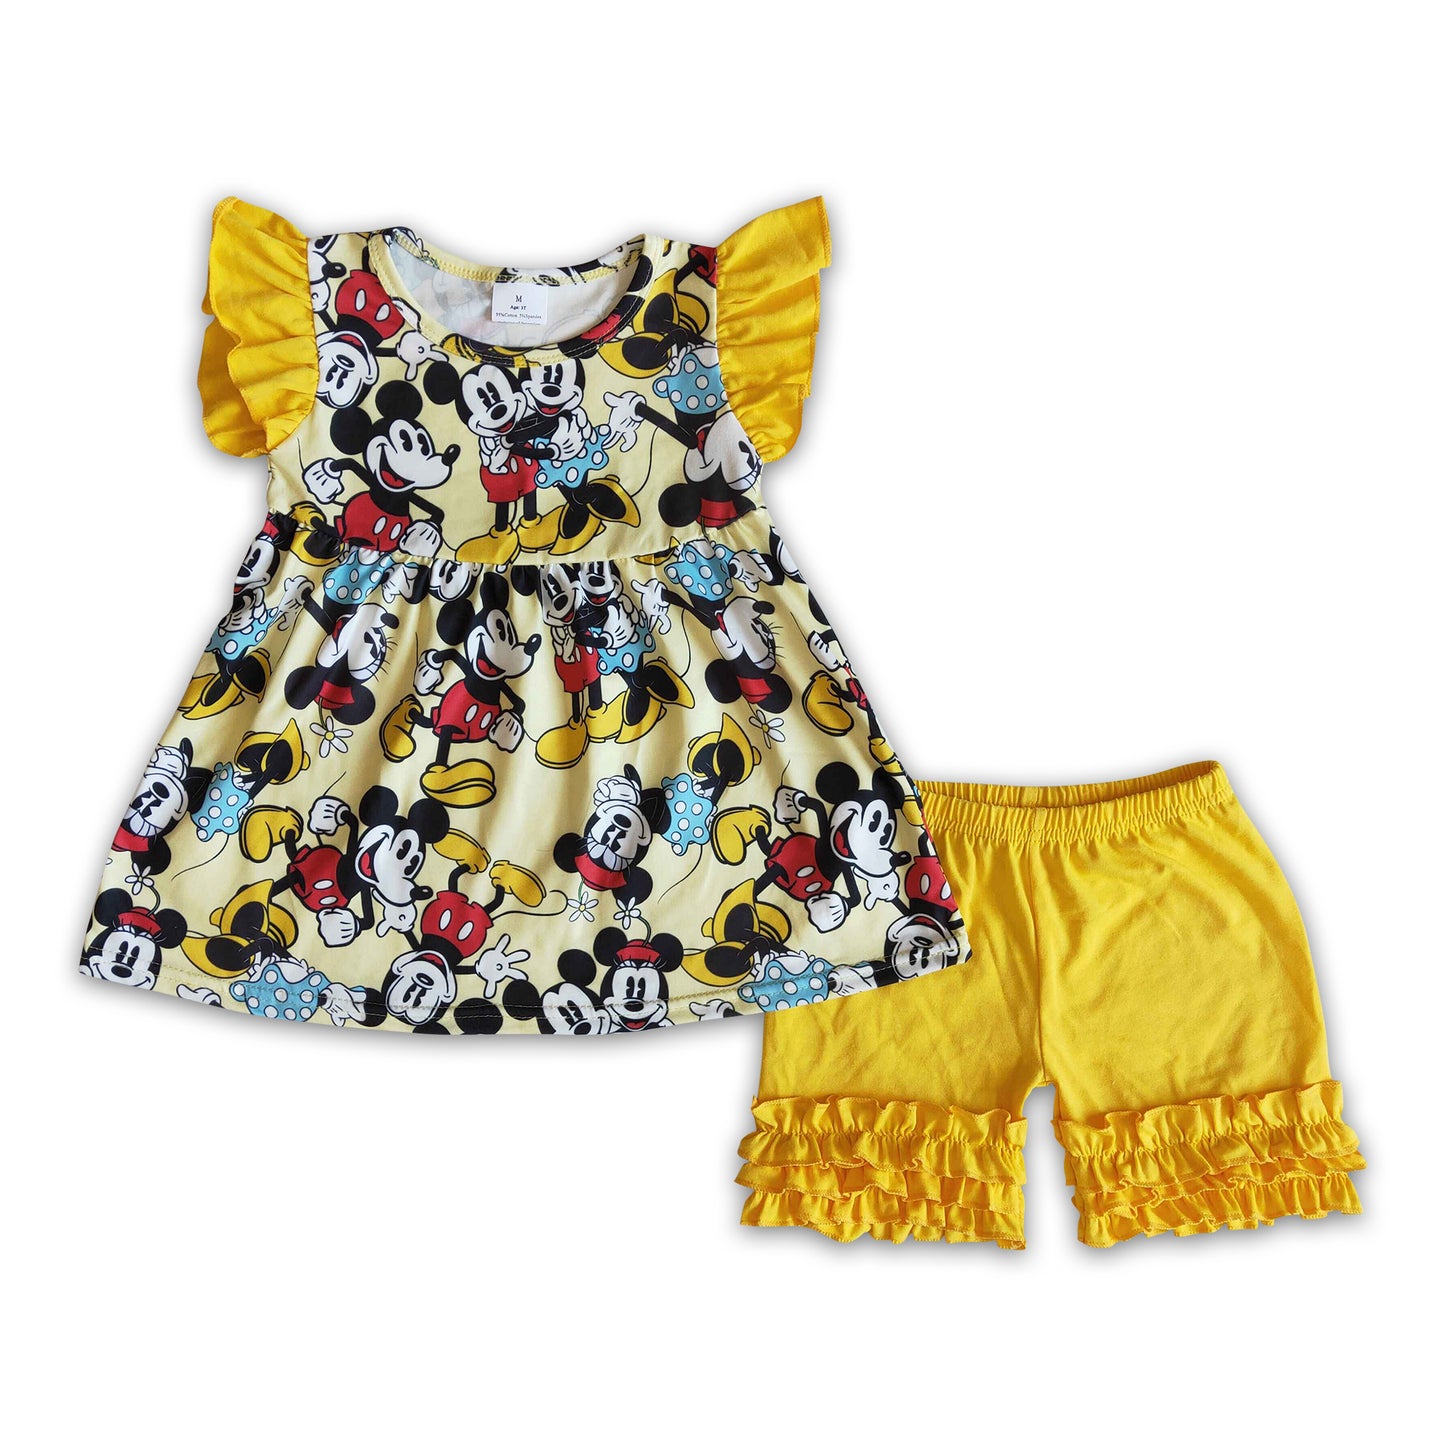 Yellow flutter sleeve mouse shirt icing ruffle shorts girls summer clothing set